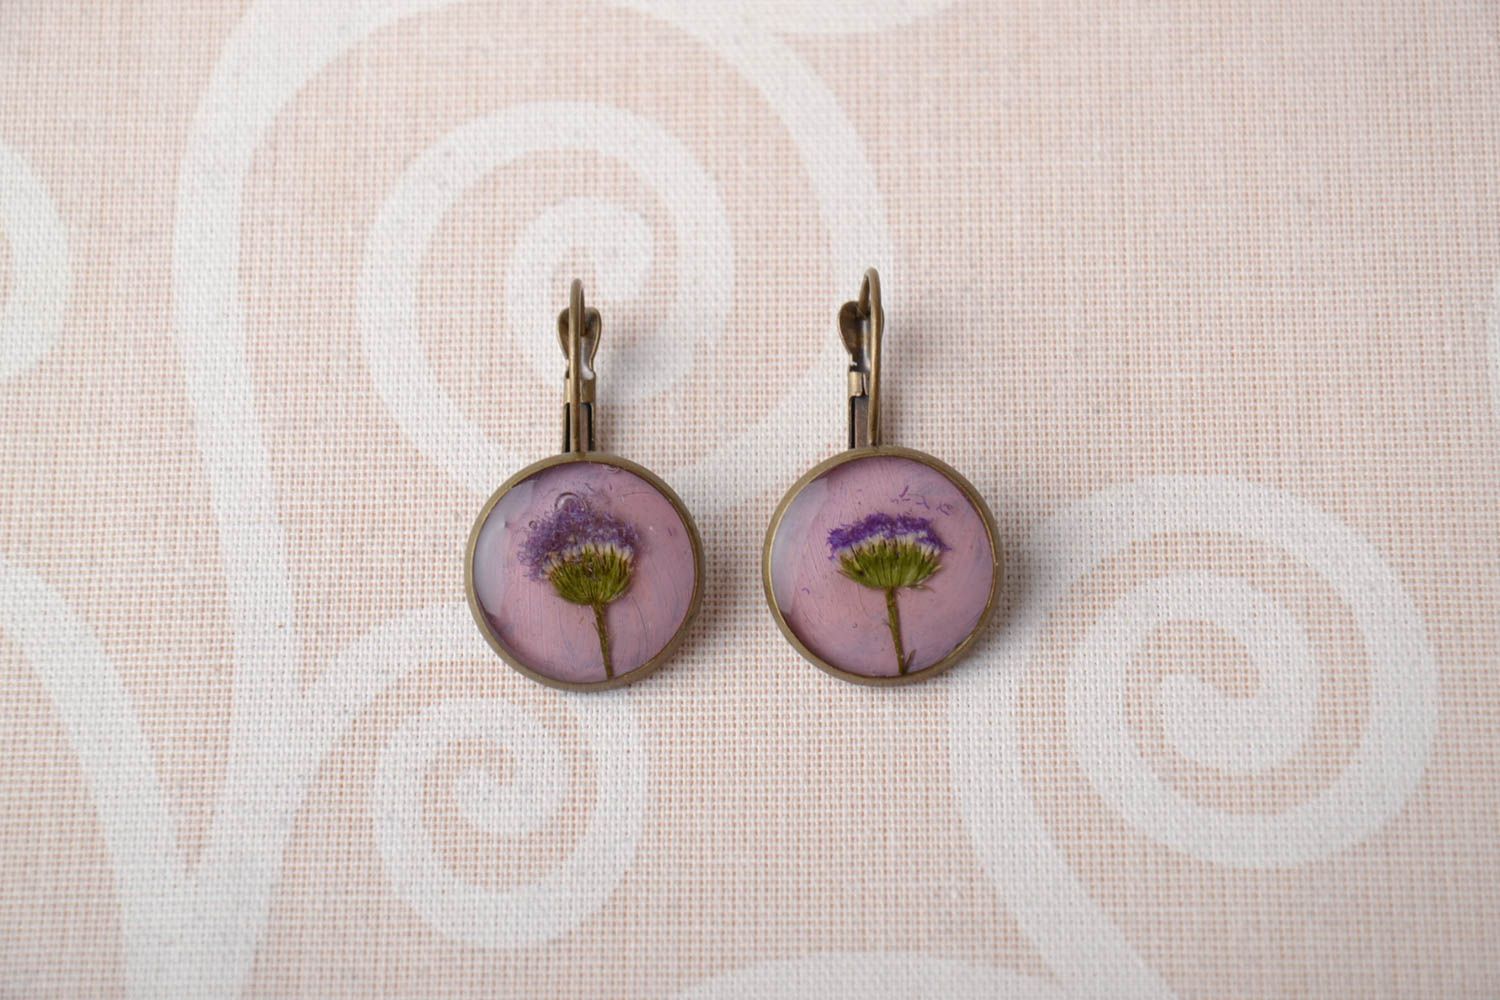 Botanical earrings in vintage style photo 1